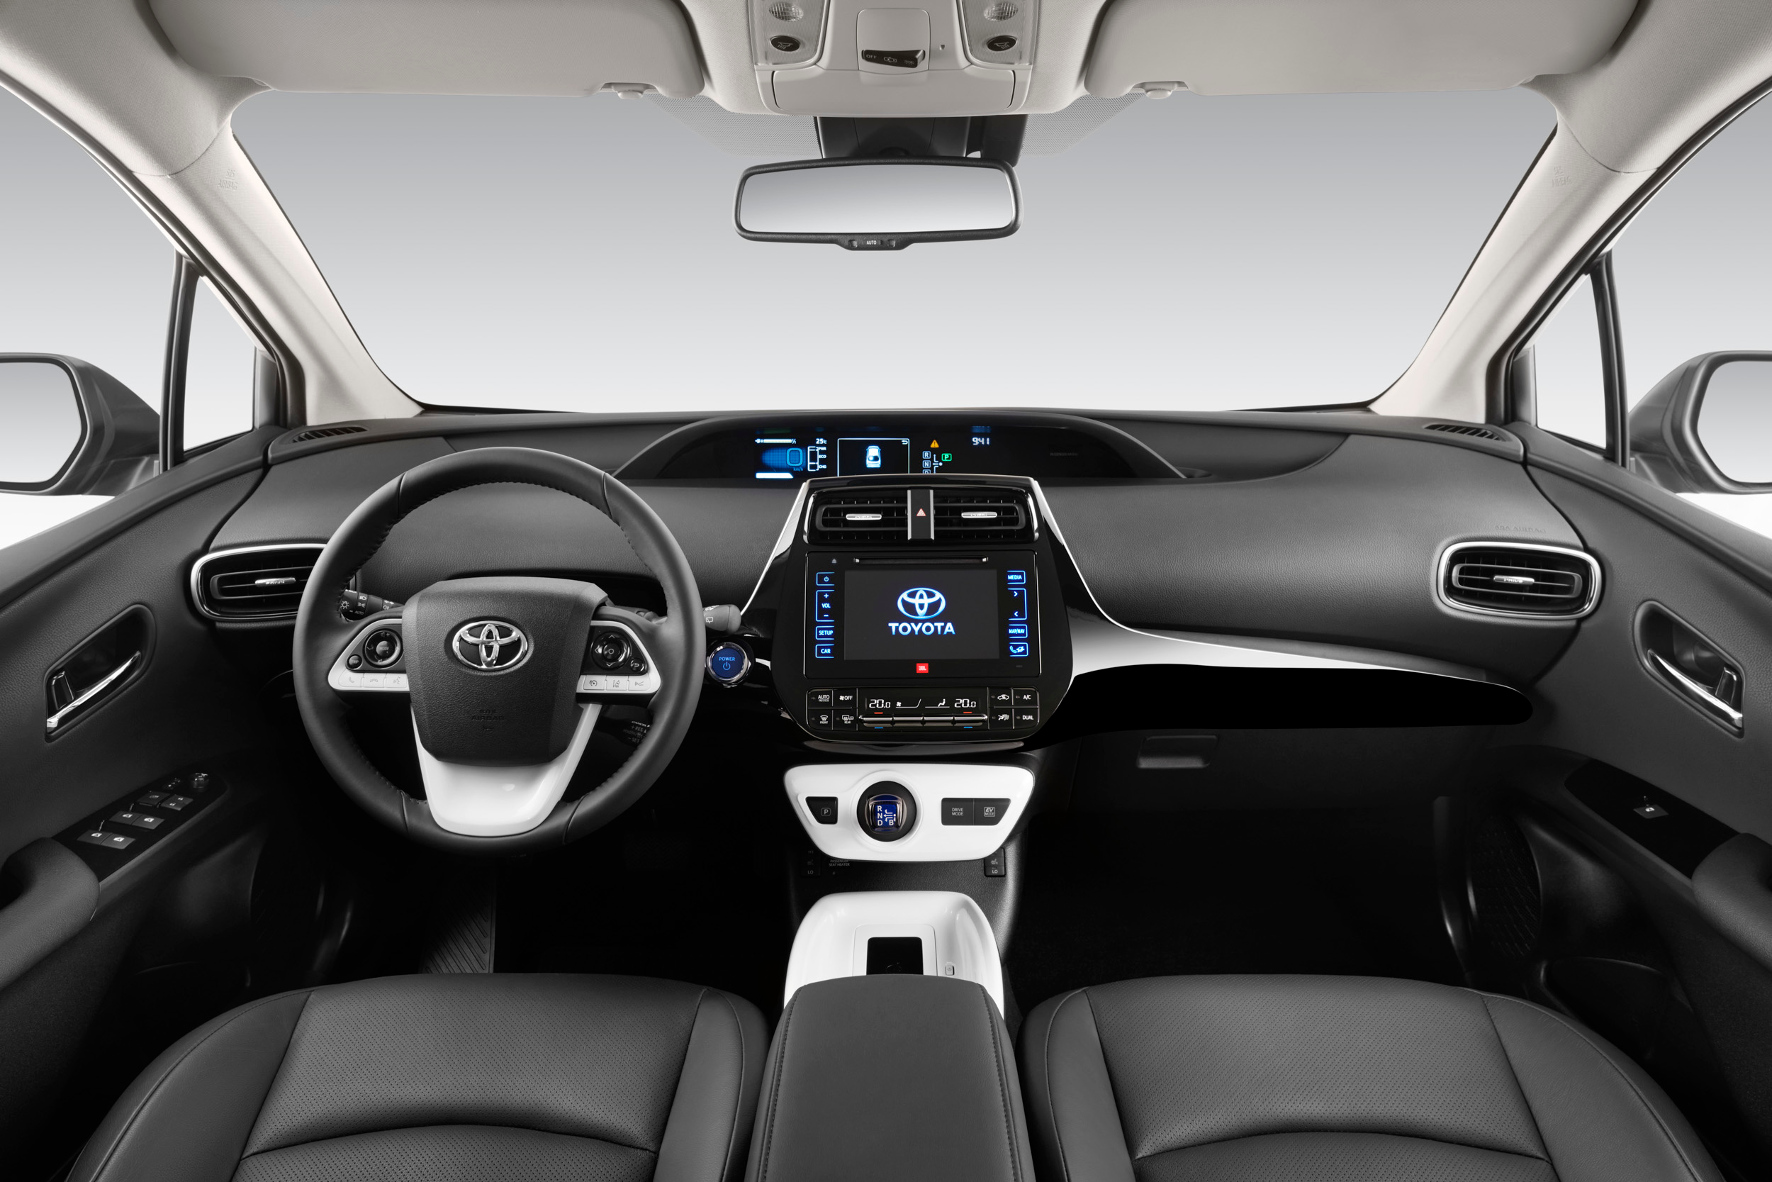 Toyota Prius Interieur Cockpit 2015 08 16 Qf Copyright